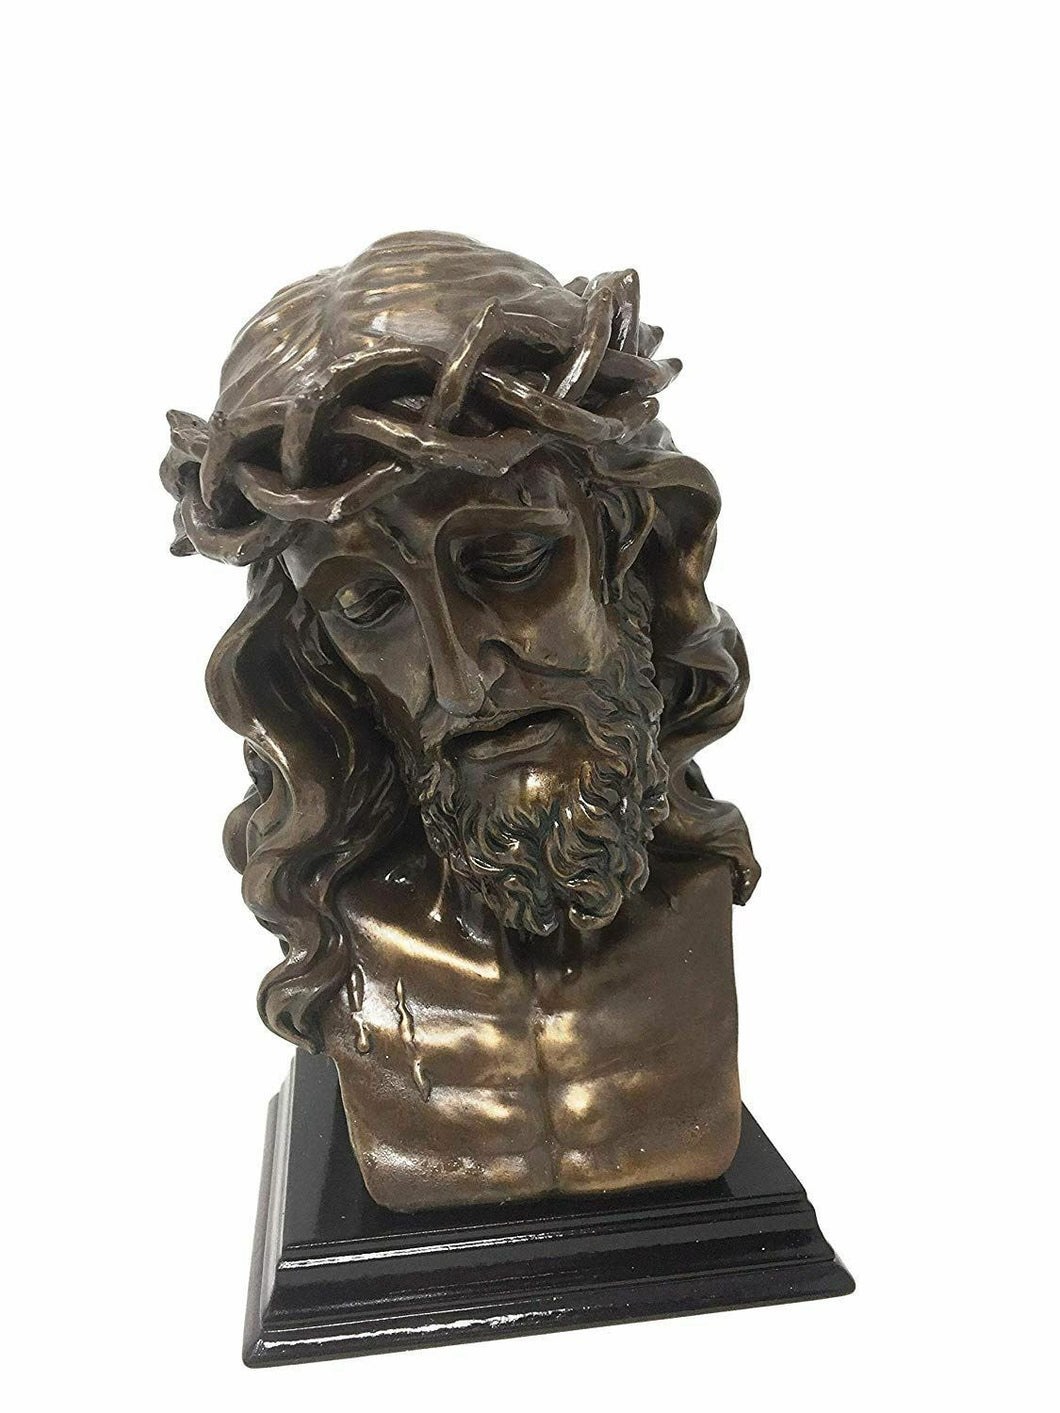 Lord Saviour Bronze Effect Bust of Jesus Ornament Statue Religious Art Sculpture